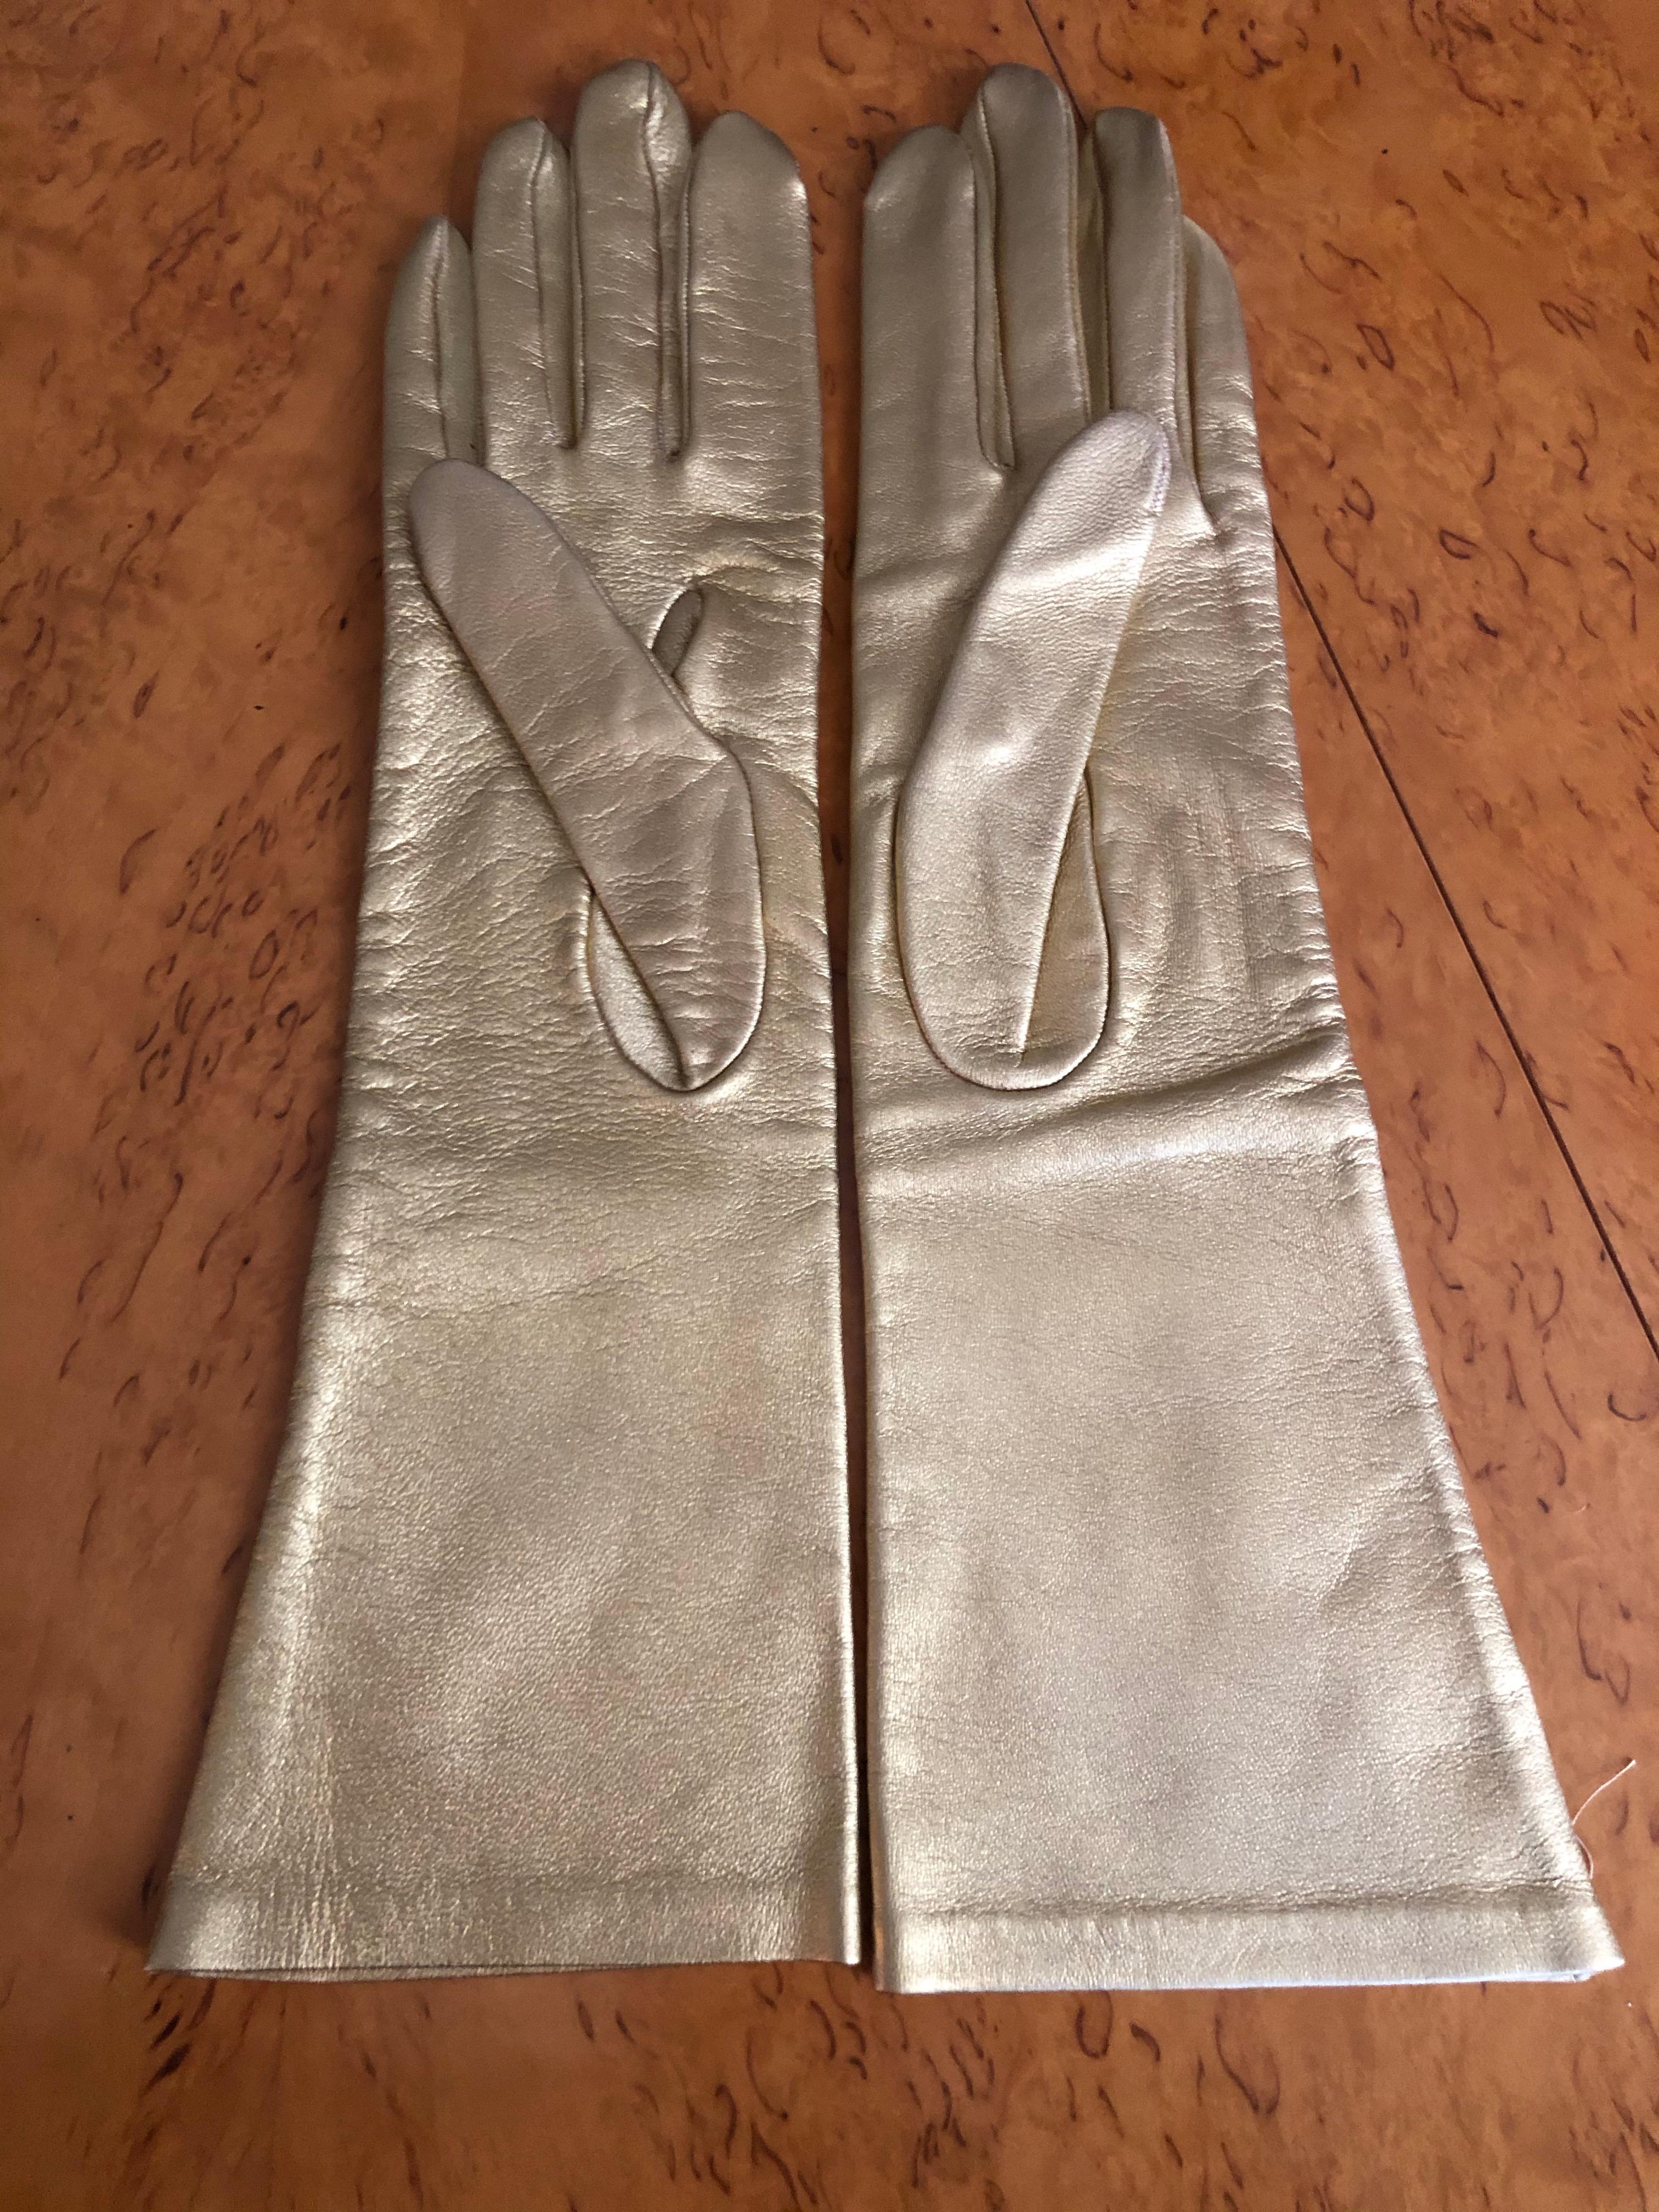 Yves Saint Laurent Rive Gauche Vintage 1970's Gold Leather Elbow Length Gloves 
size 7 1/2